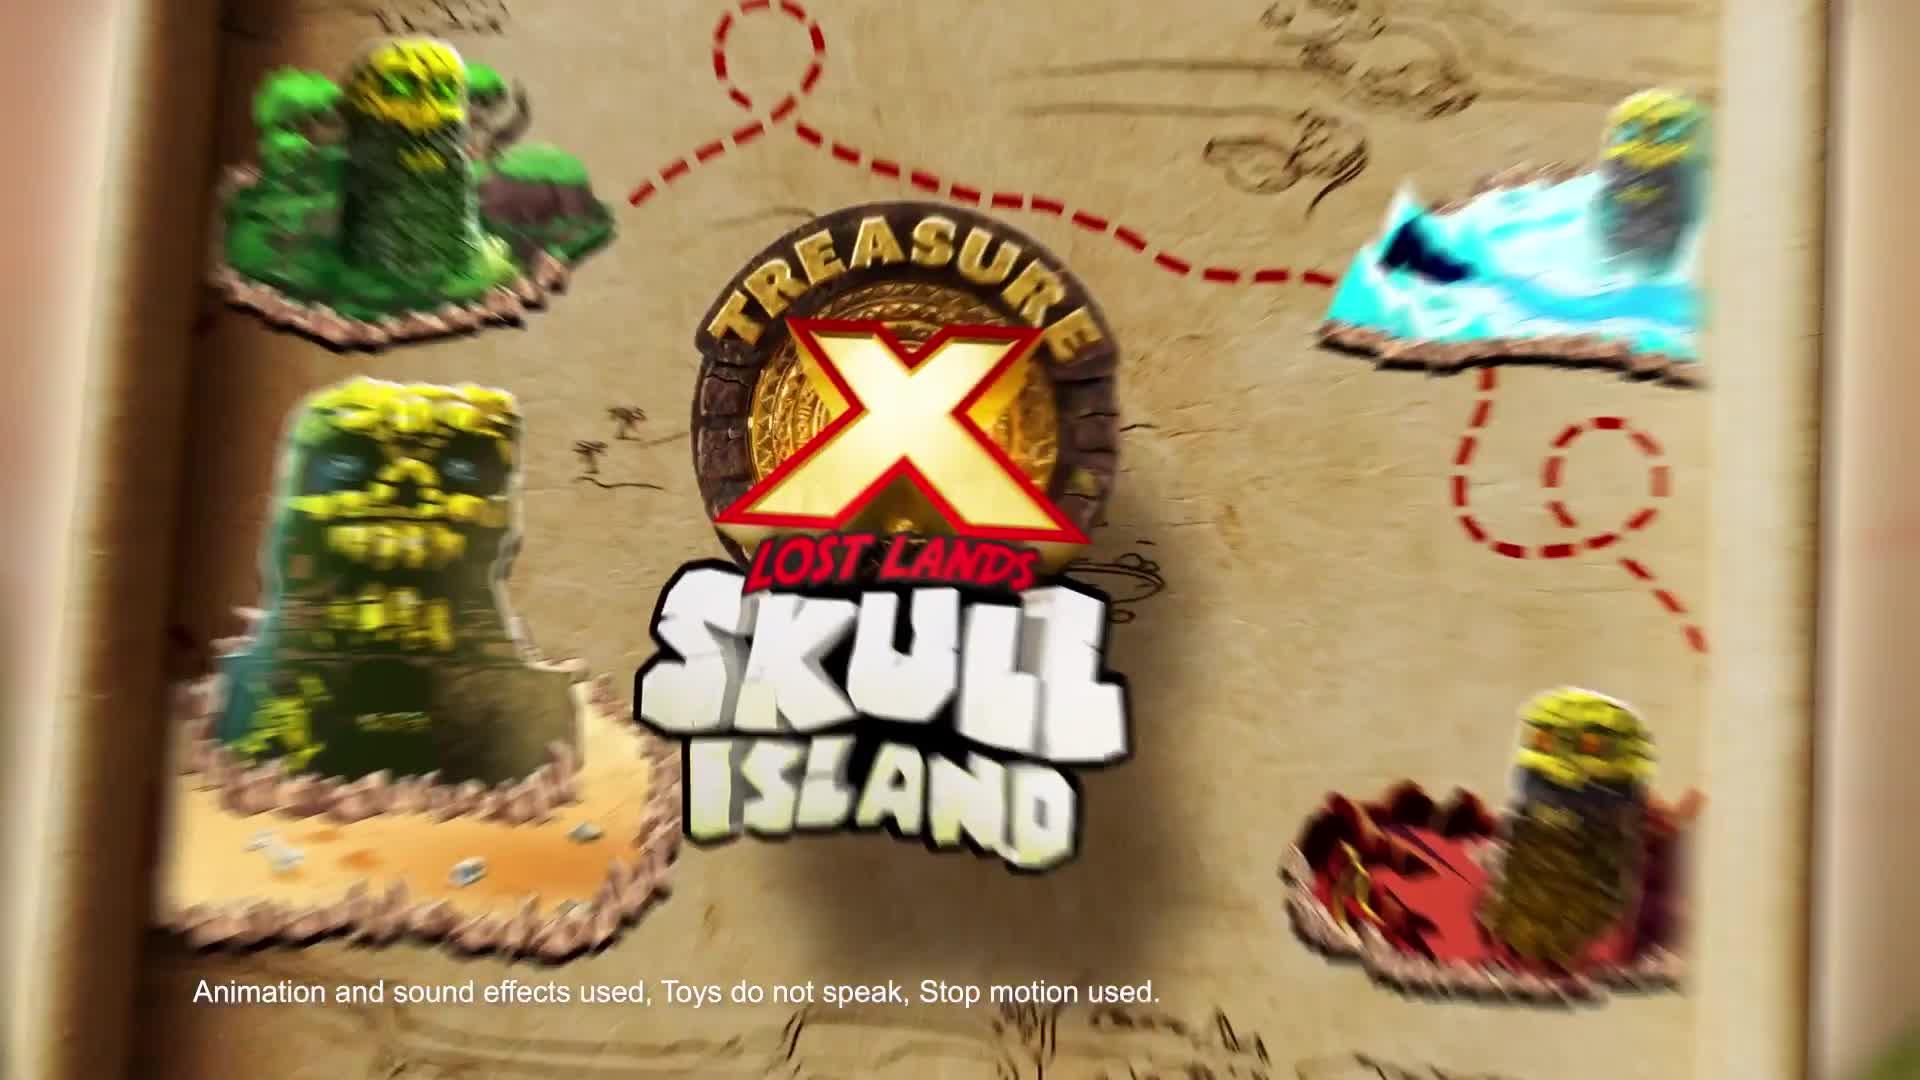 Original Treasure X Lost Lands Skull Island Lava Tower Micro